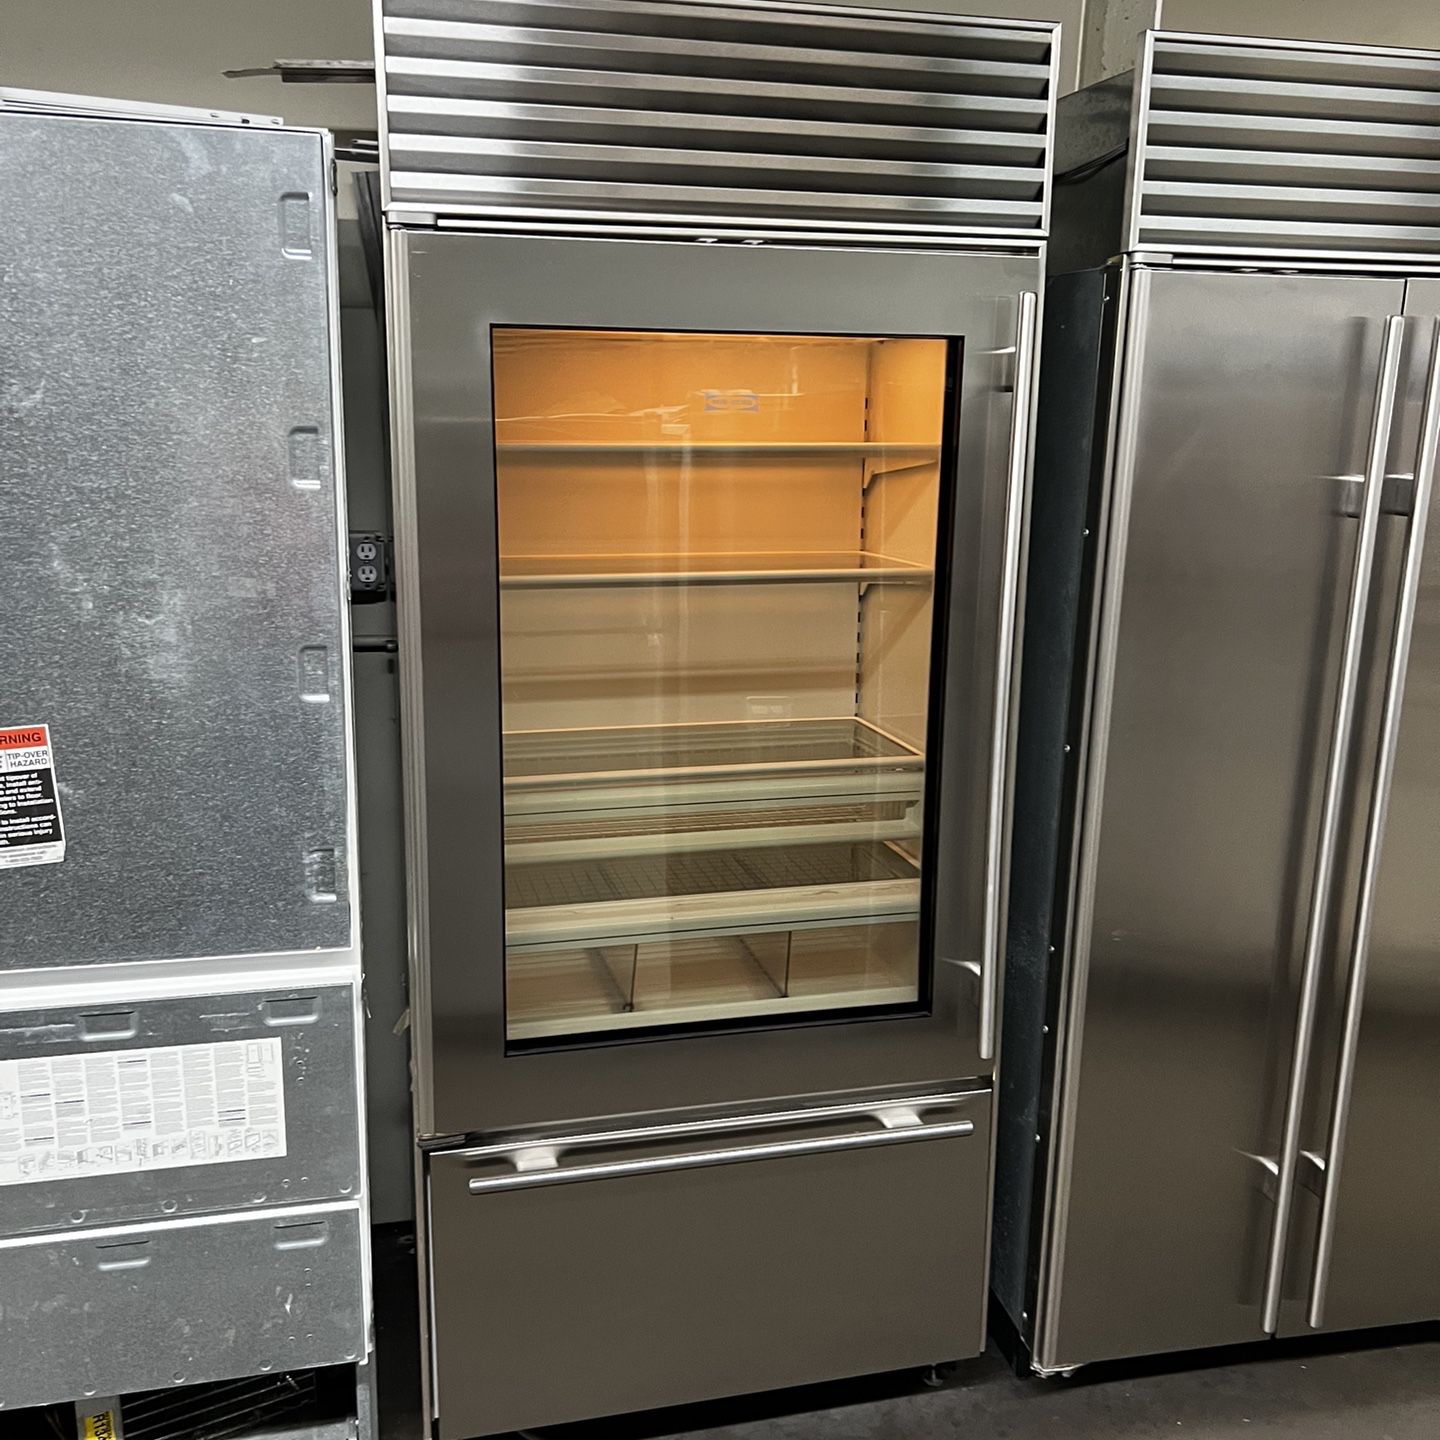 Sub Zero 36”Wide Built In Bottom Freezer Refrigerator With Glass View